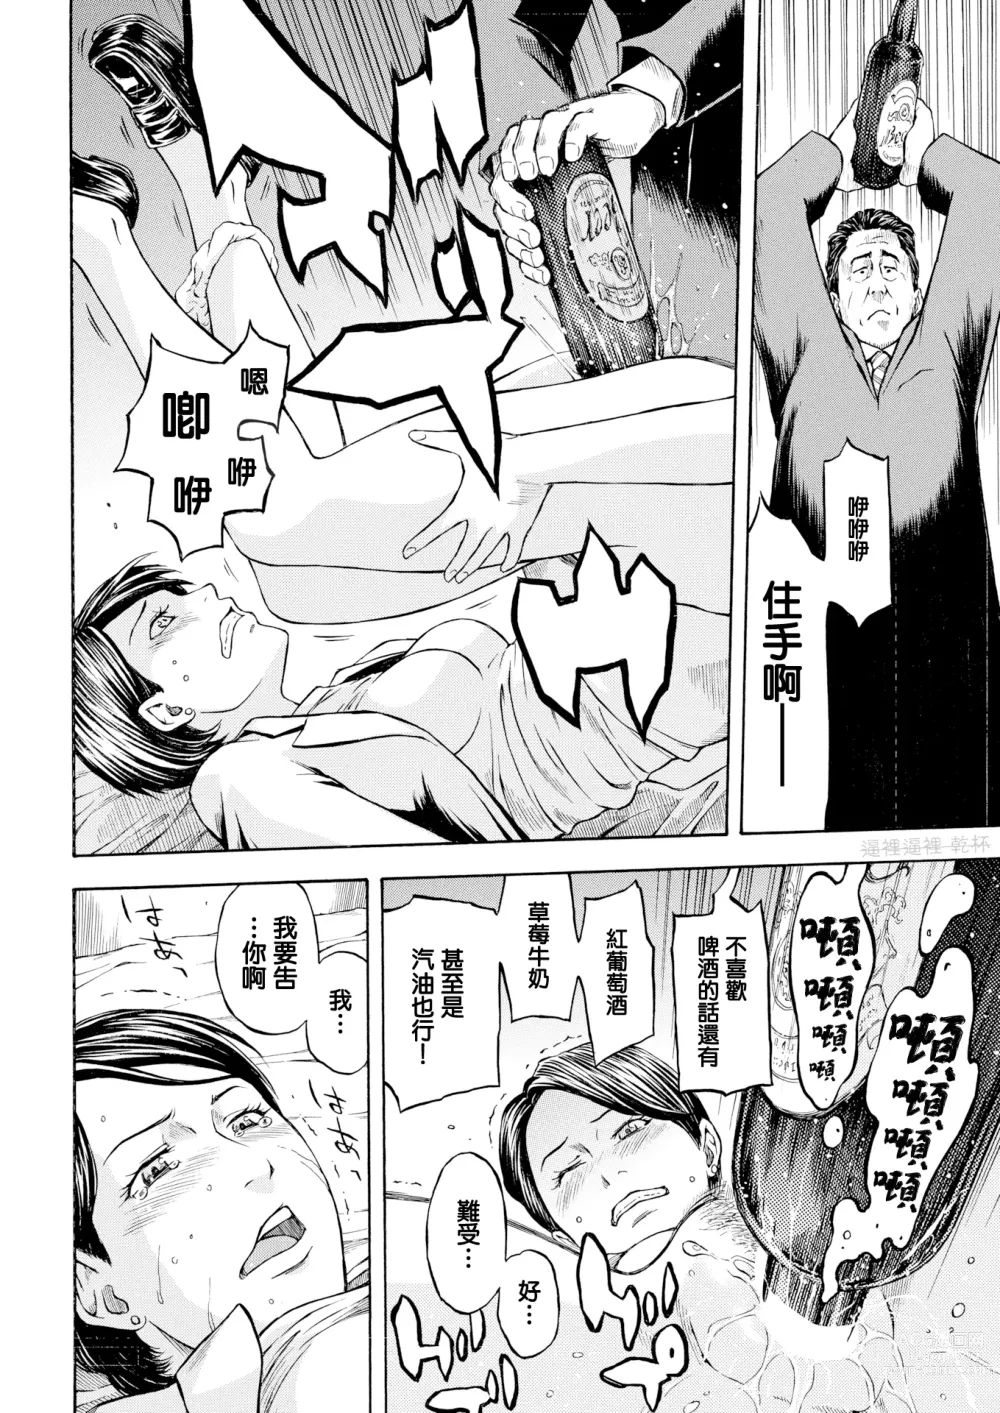 Page 7 of manga Abare Sannanbou Shougun